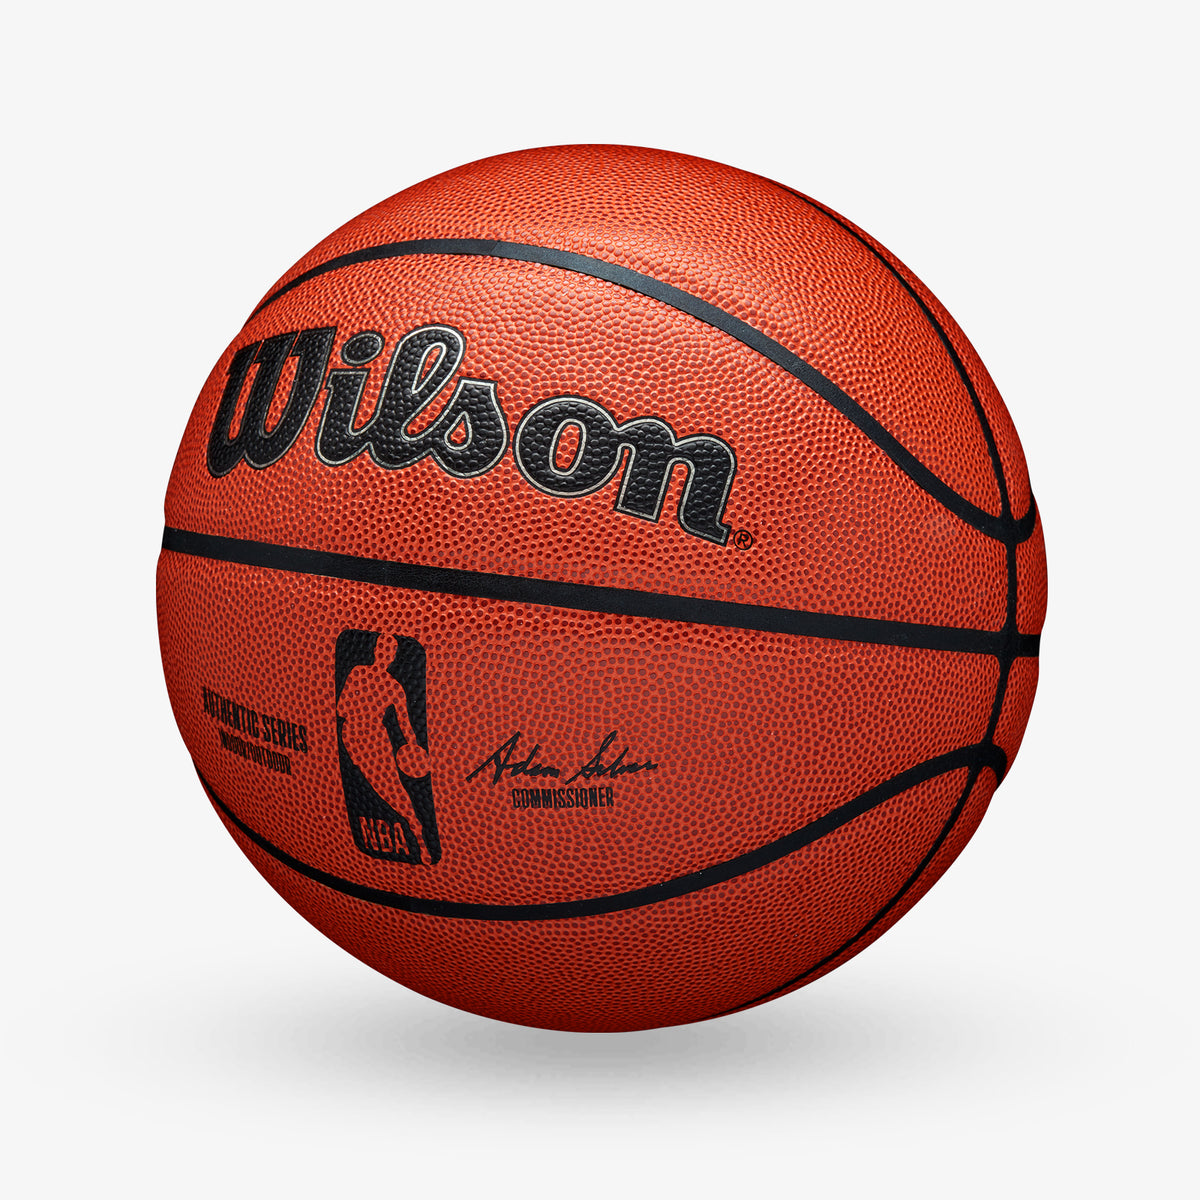 NBA Authentic Series Indoor/Outdoor Basketball - Size 7